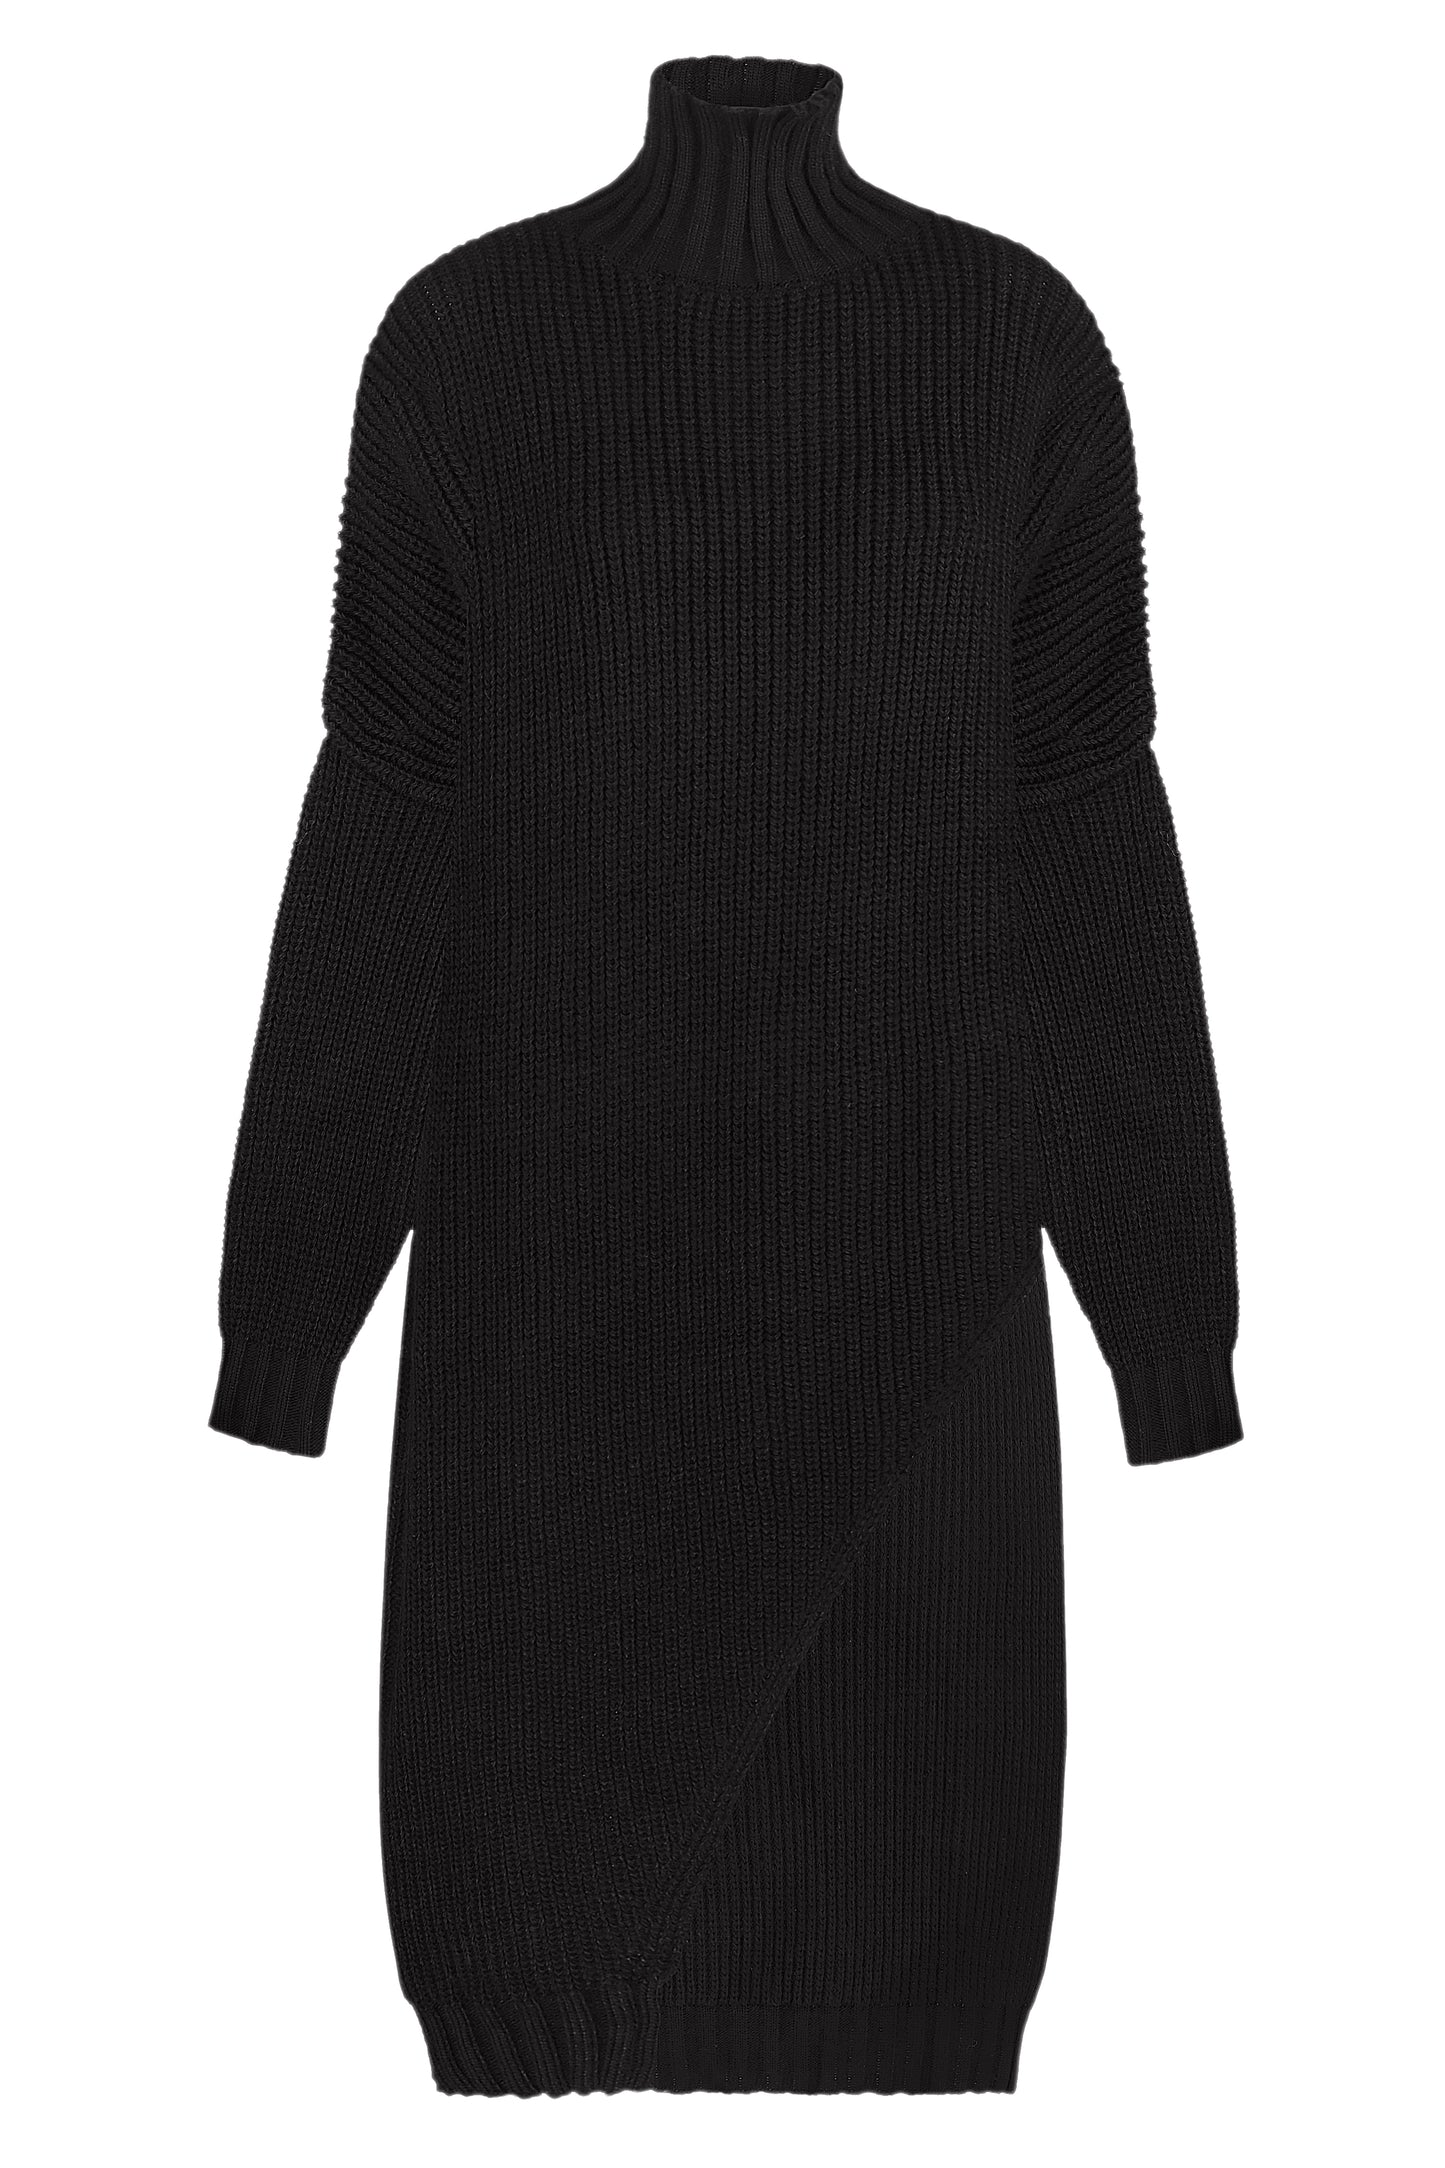 Longline knitted jumper dress T.MOSCA